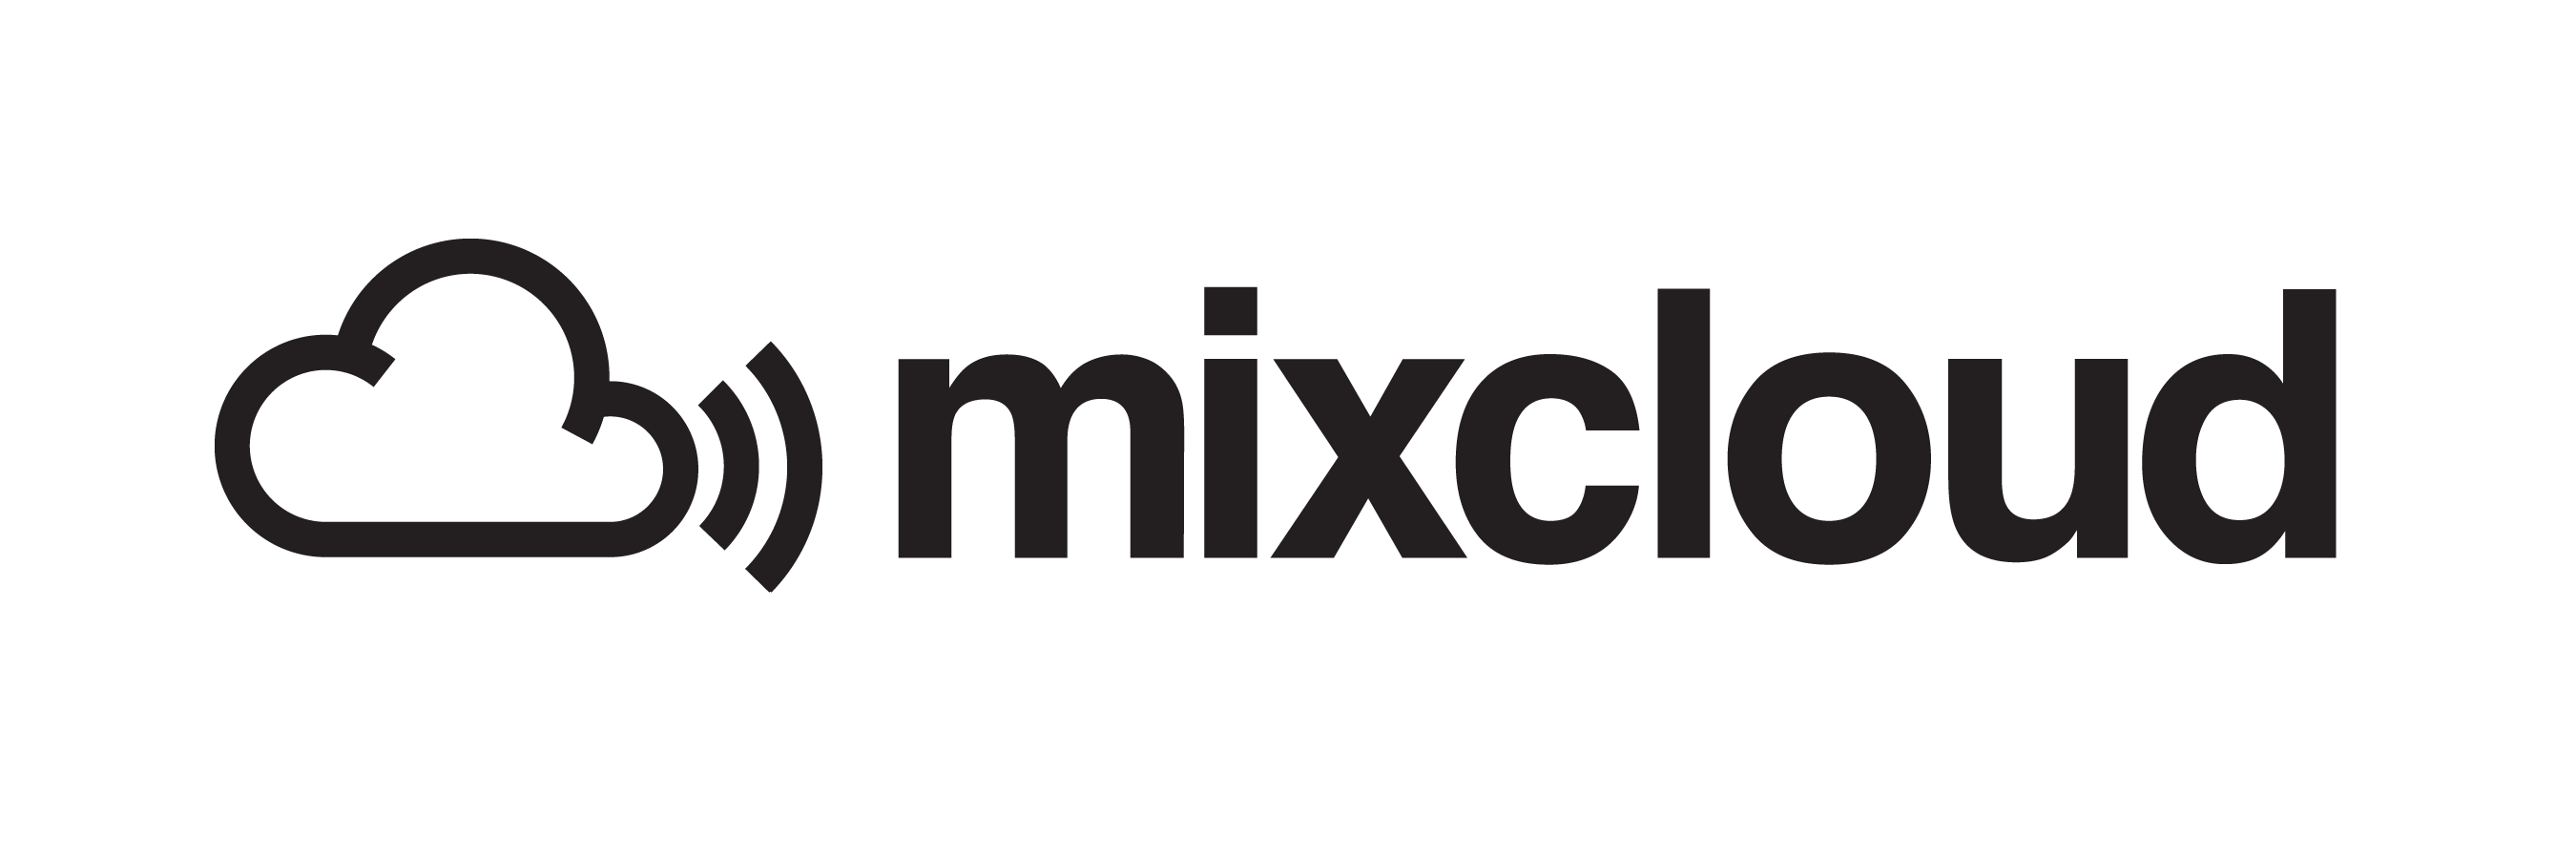 Mixcloud-large-white-300dpi